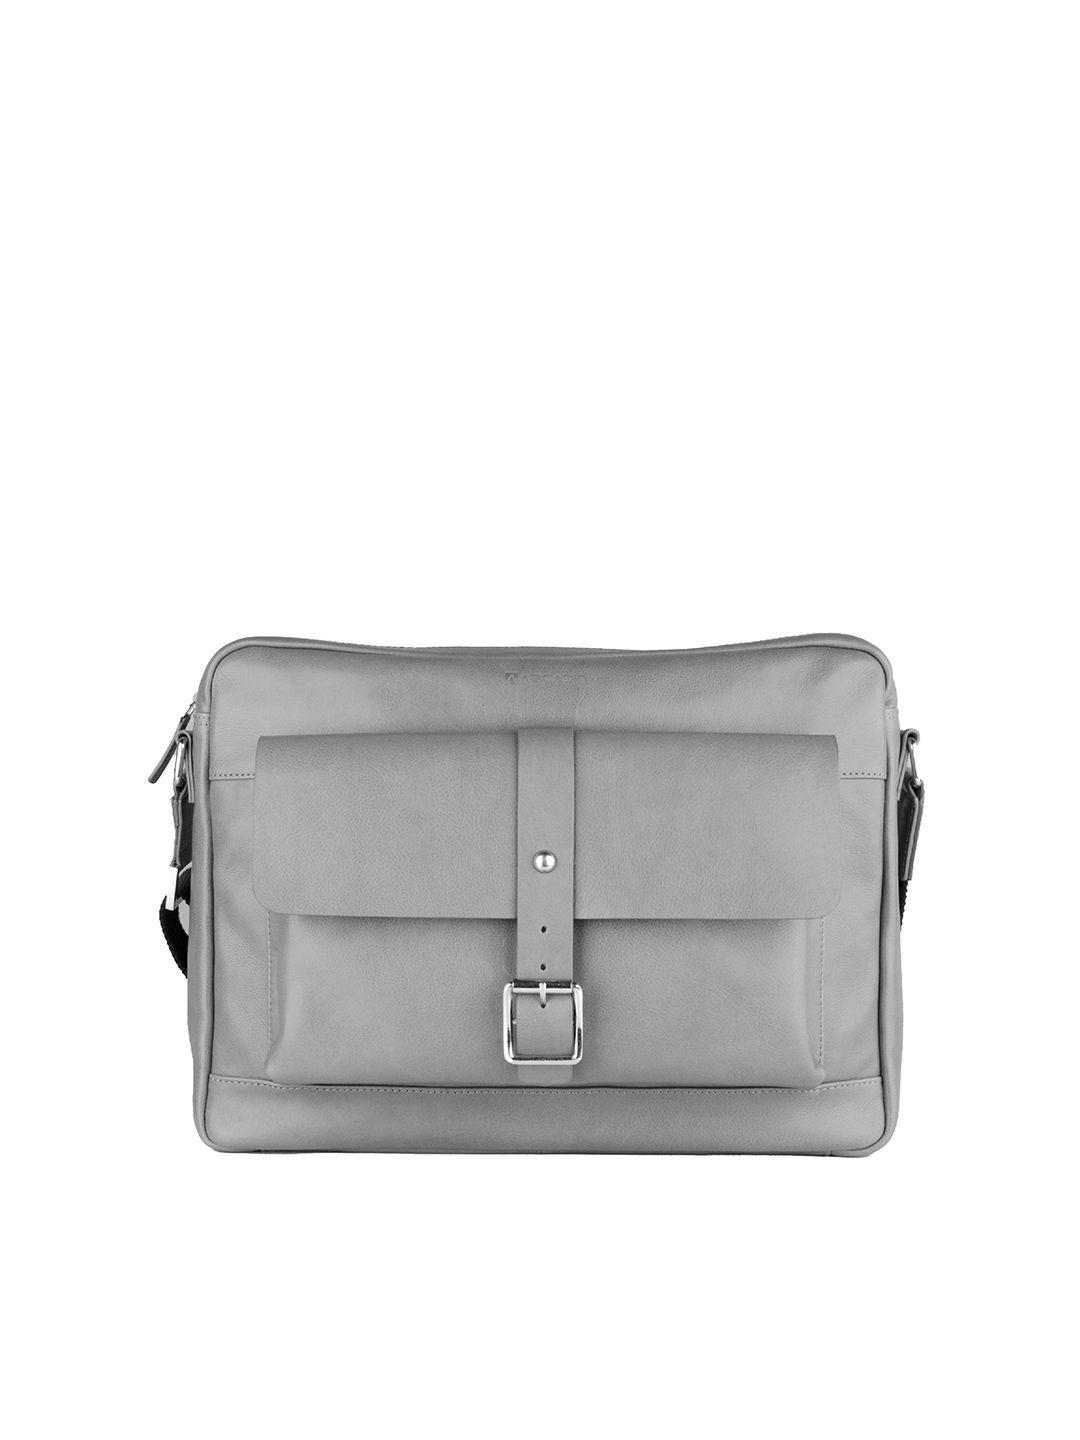 arcadio unisex grey & silver-toned textured leather laptop bag